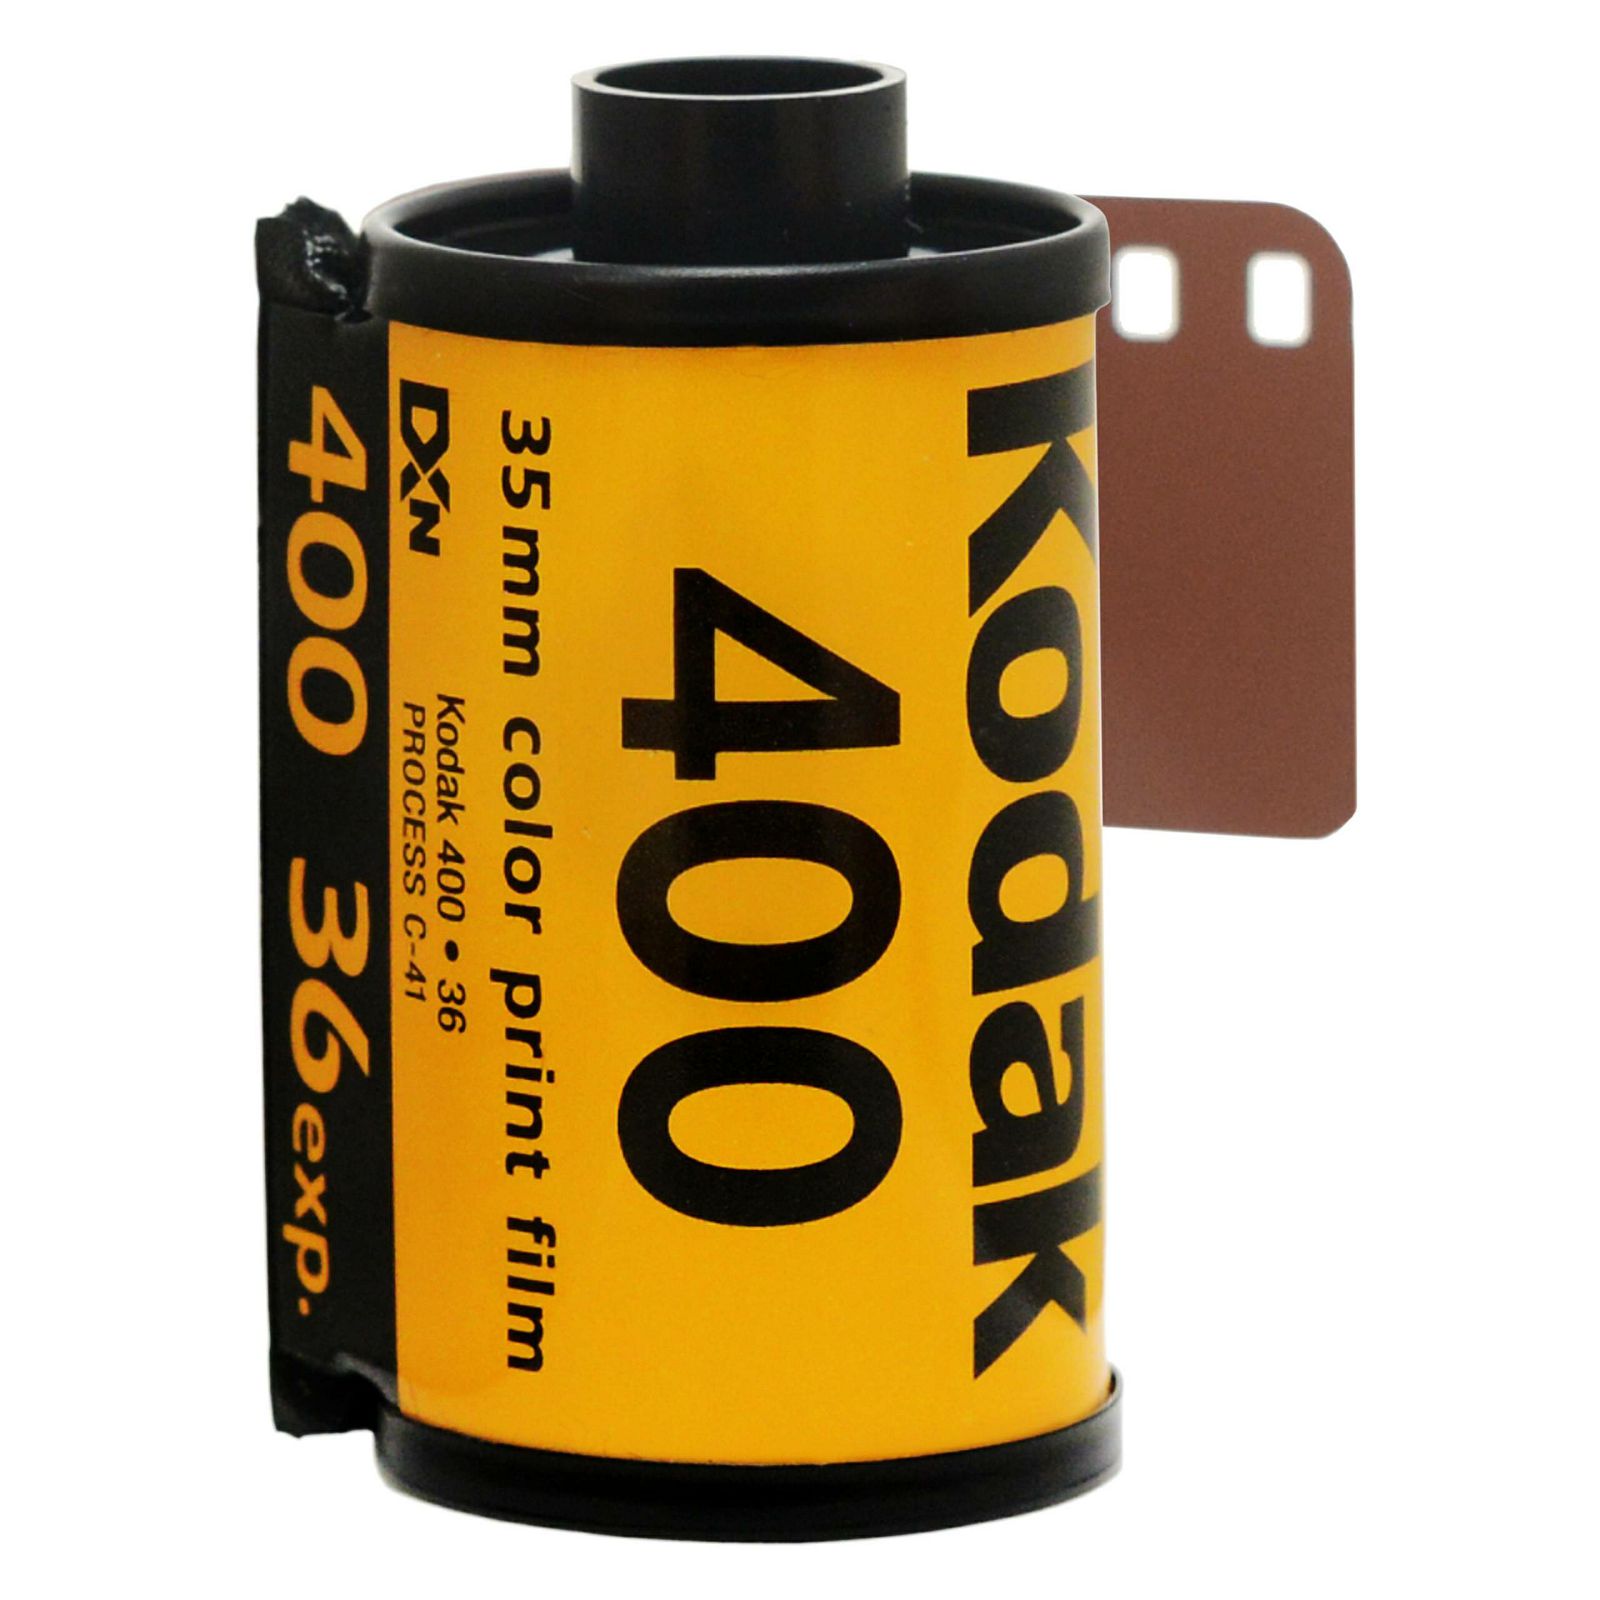 Kodak Film Ultra max 400 135/36 Color Negative 35mm film za 36 fotografija 1x3 komplet 3 pakiranja